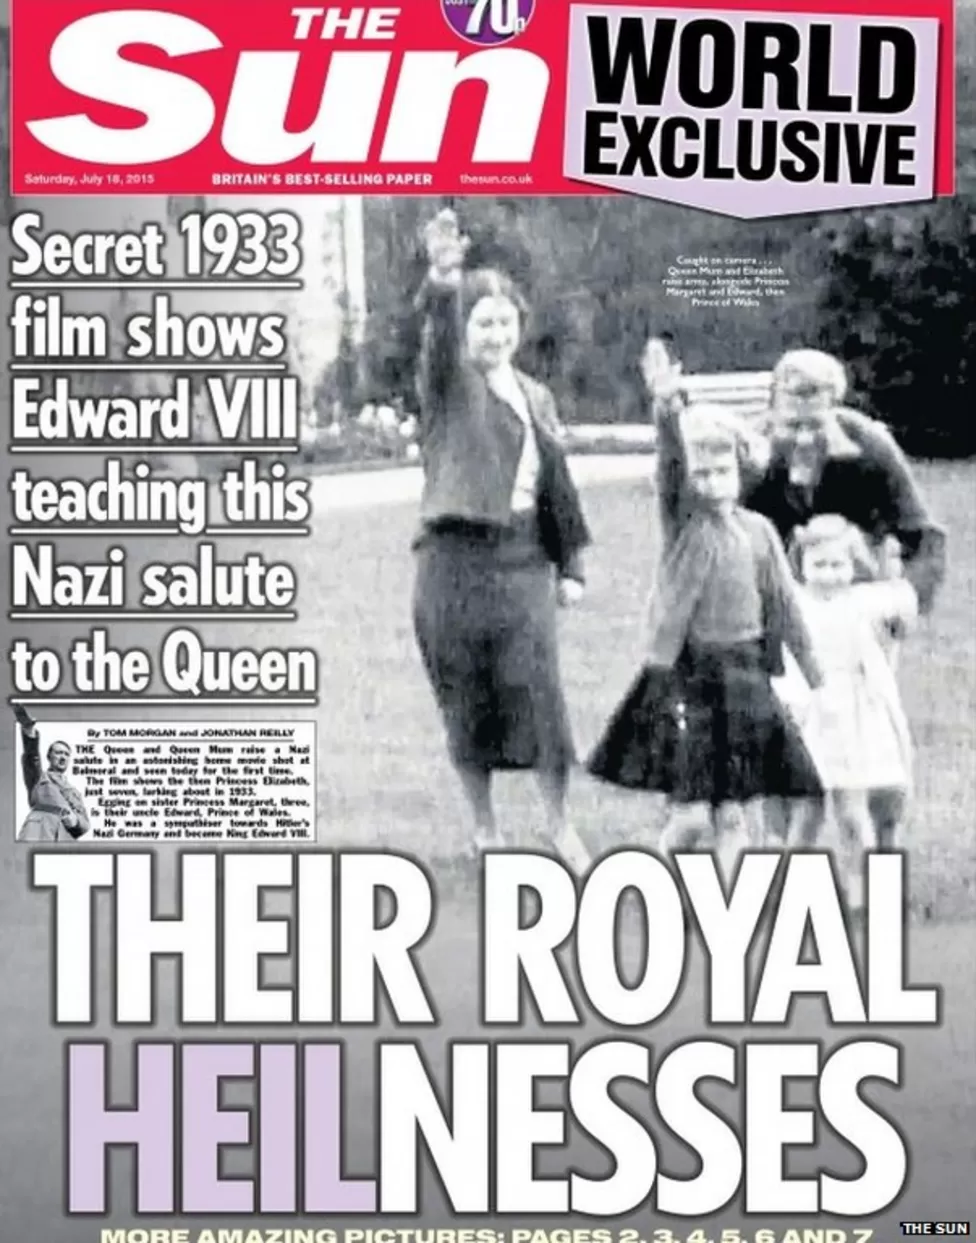 The Sun about Nazi salute